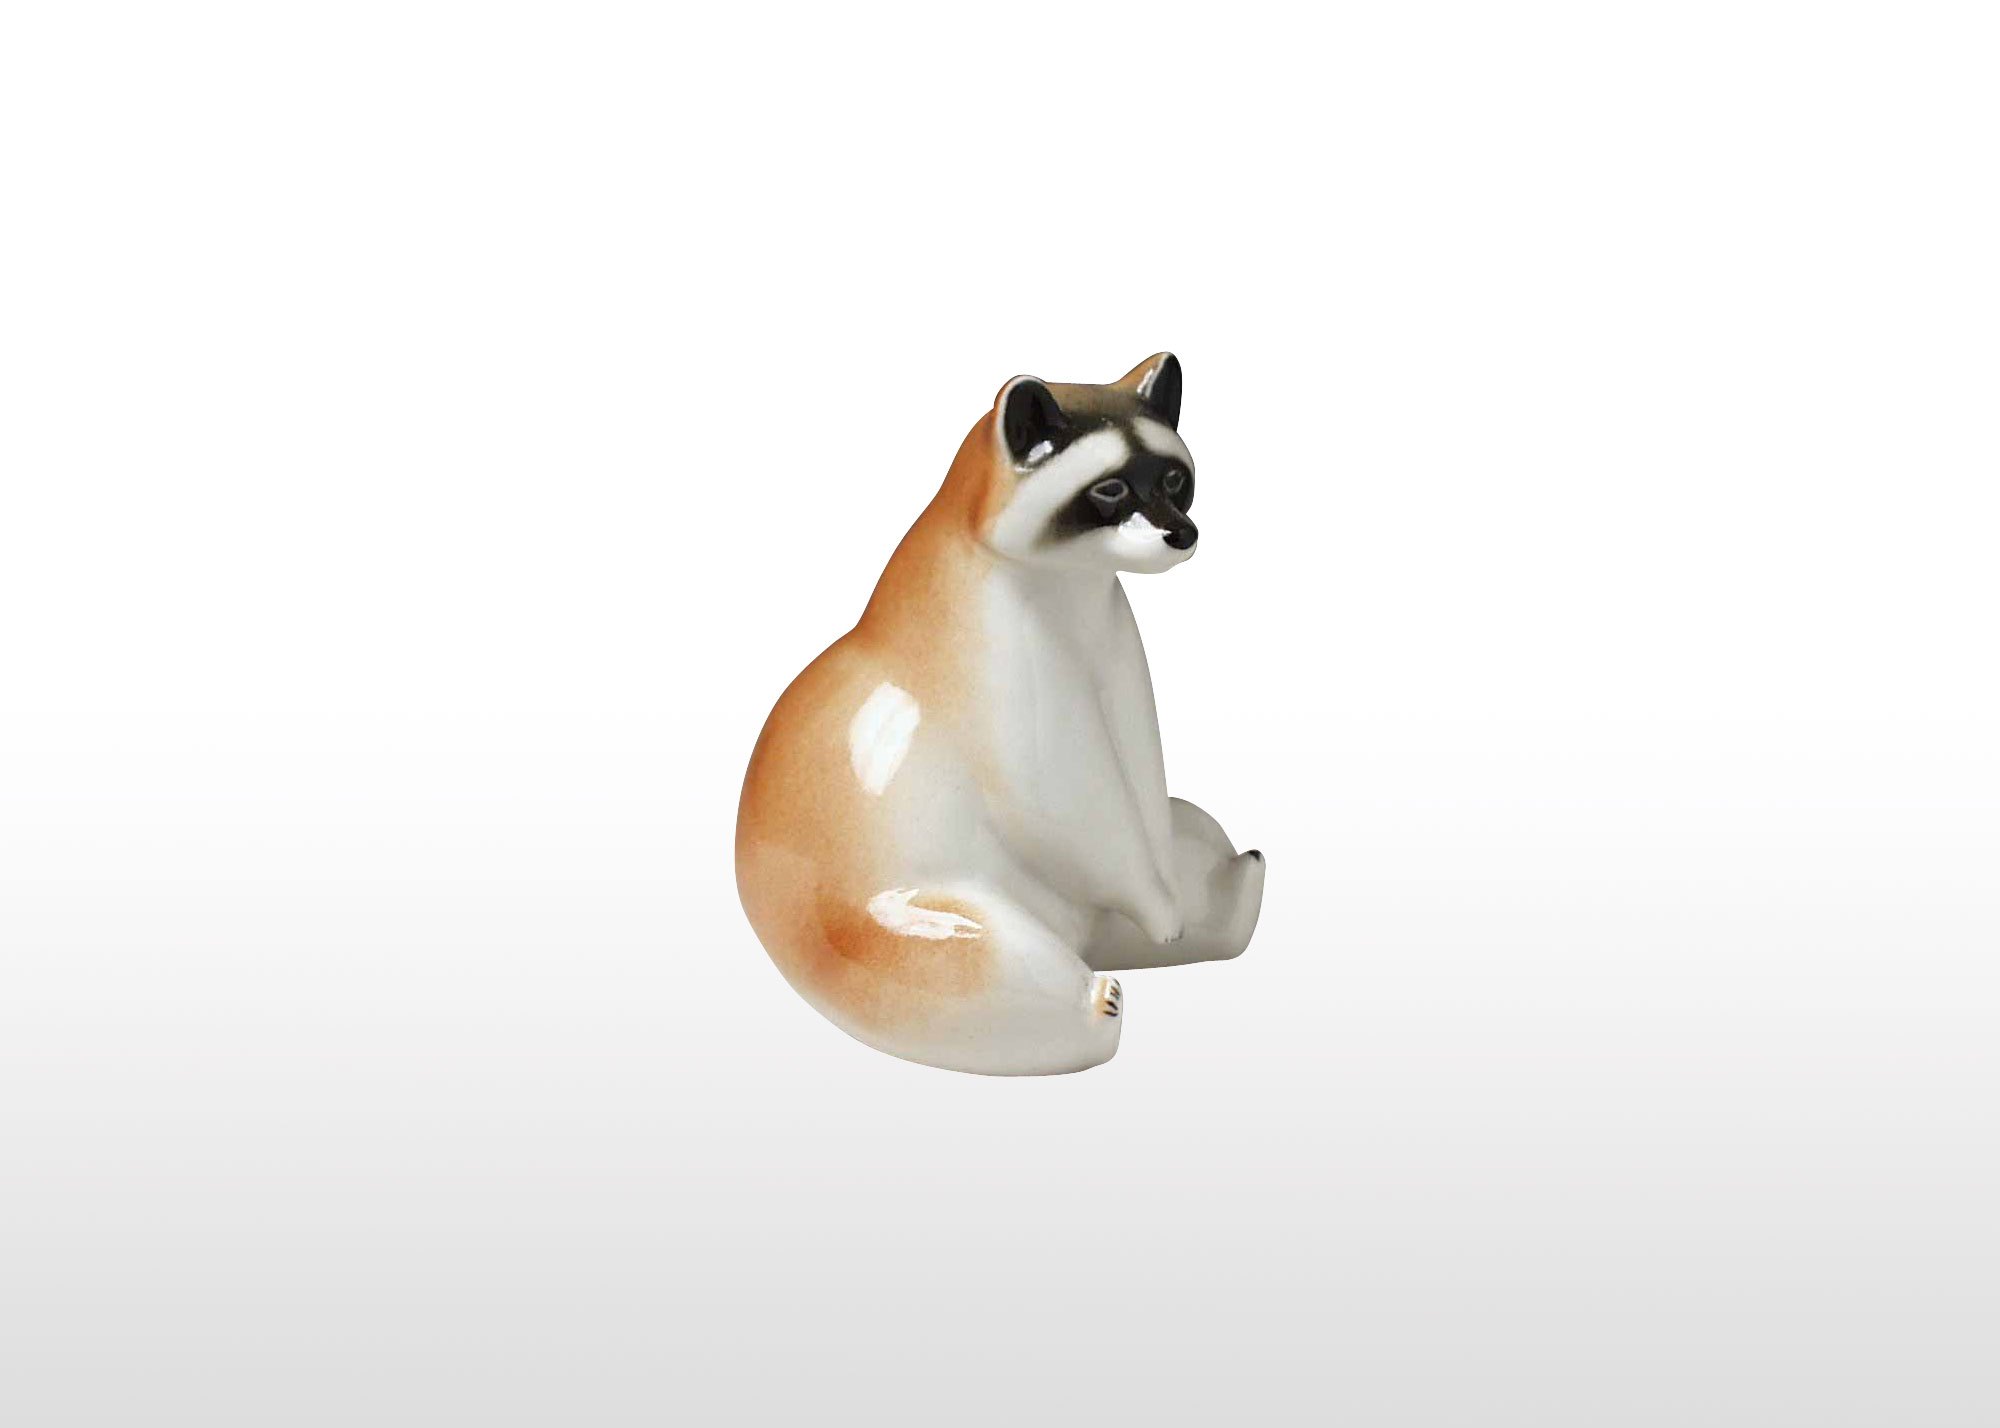 Buy Sitting Raccoon Figurine at GoldenCockerel.com